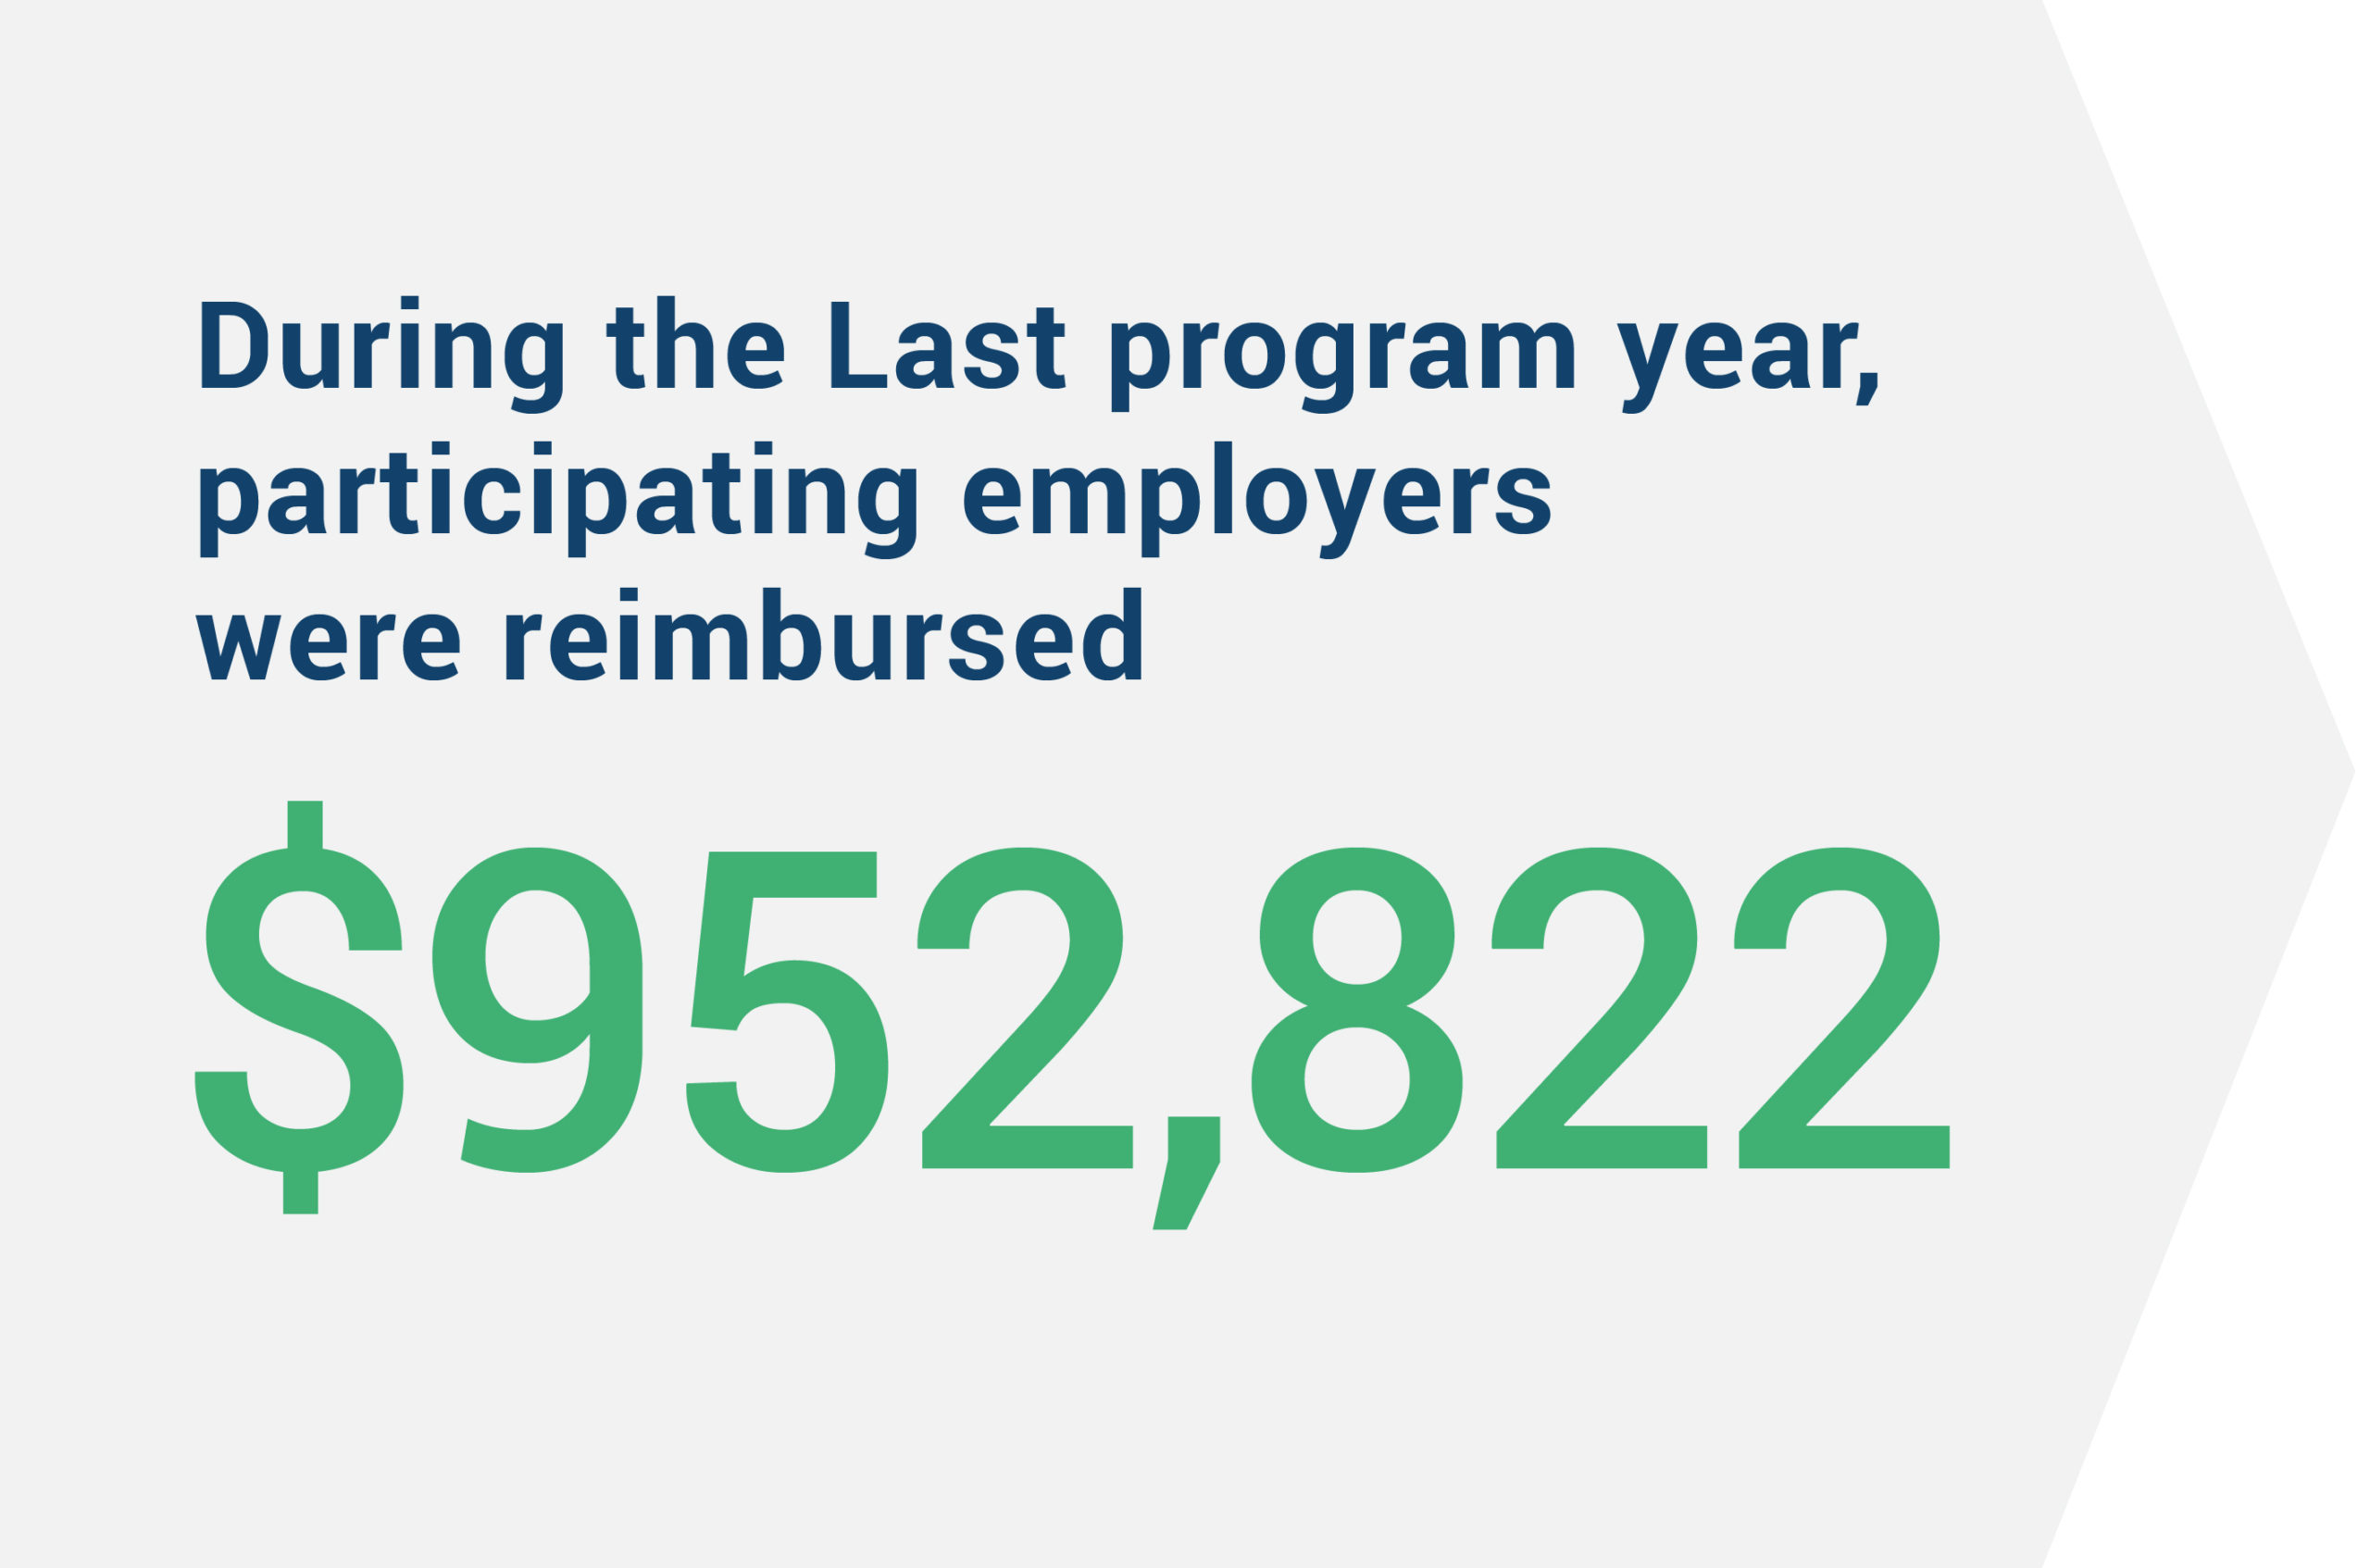 last program year participating employers were reimbursed $952,822